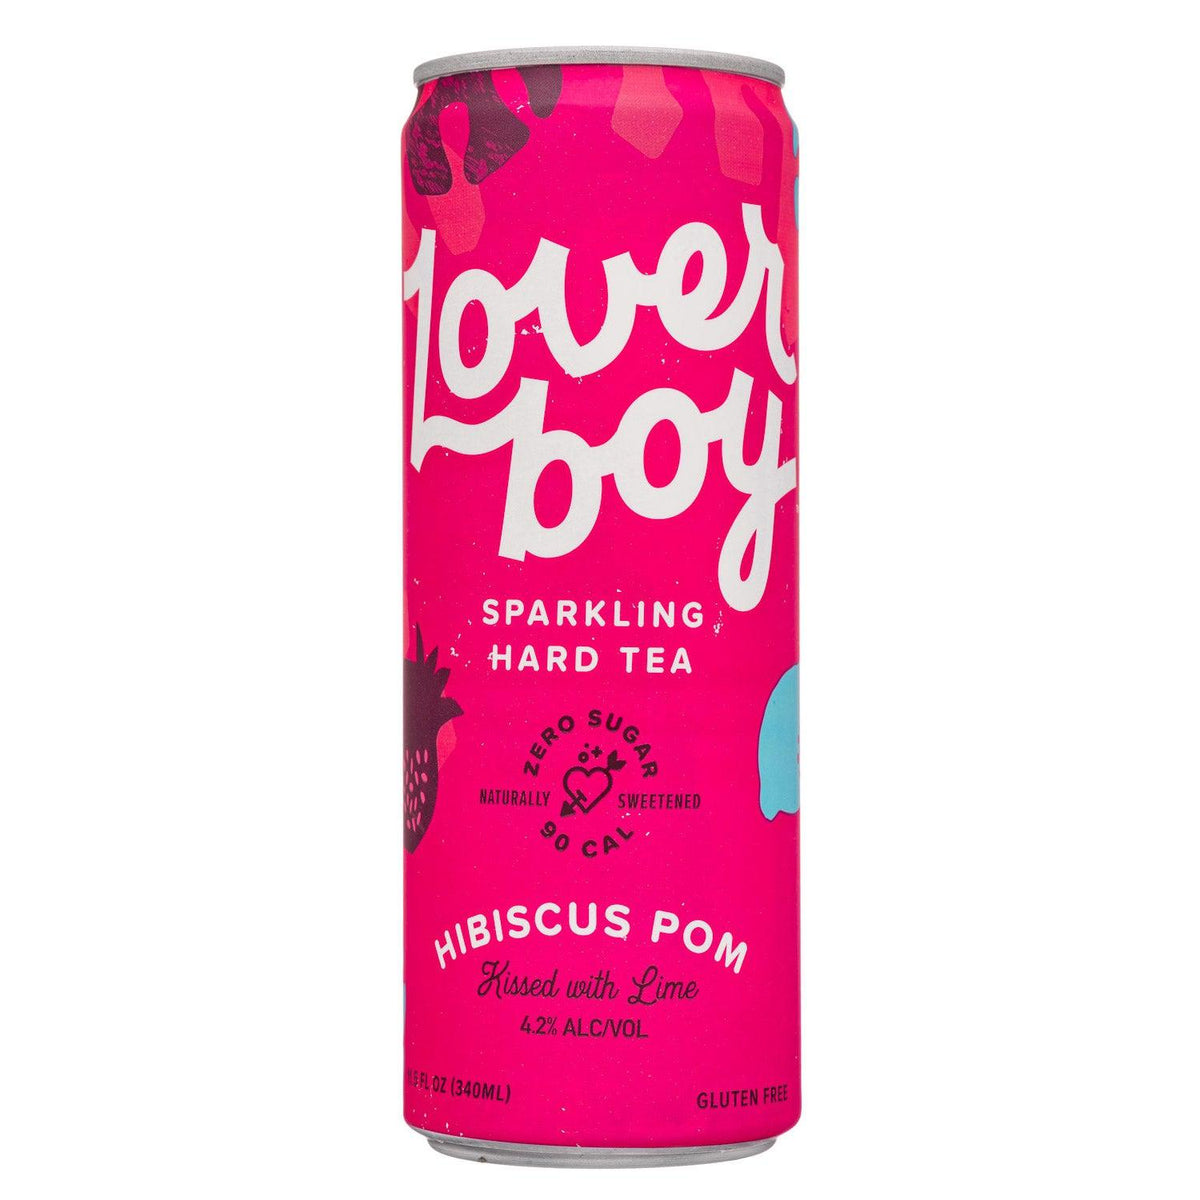 Loverboy Sparkling Hard Tea Hibiscus Pom